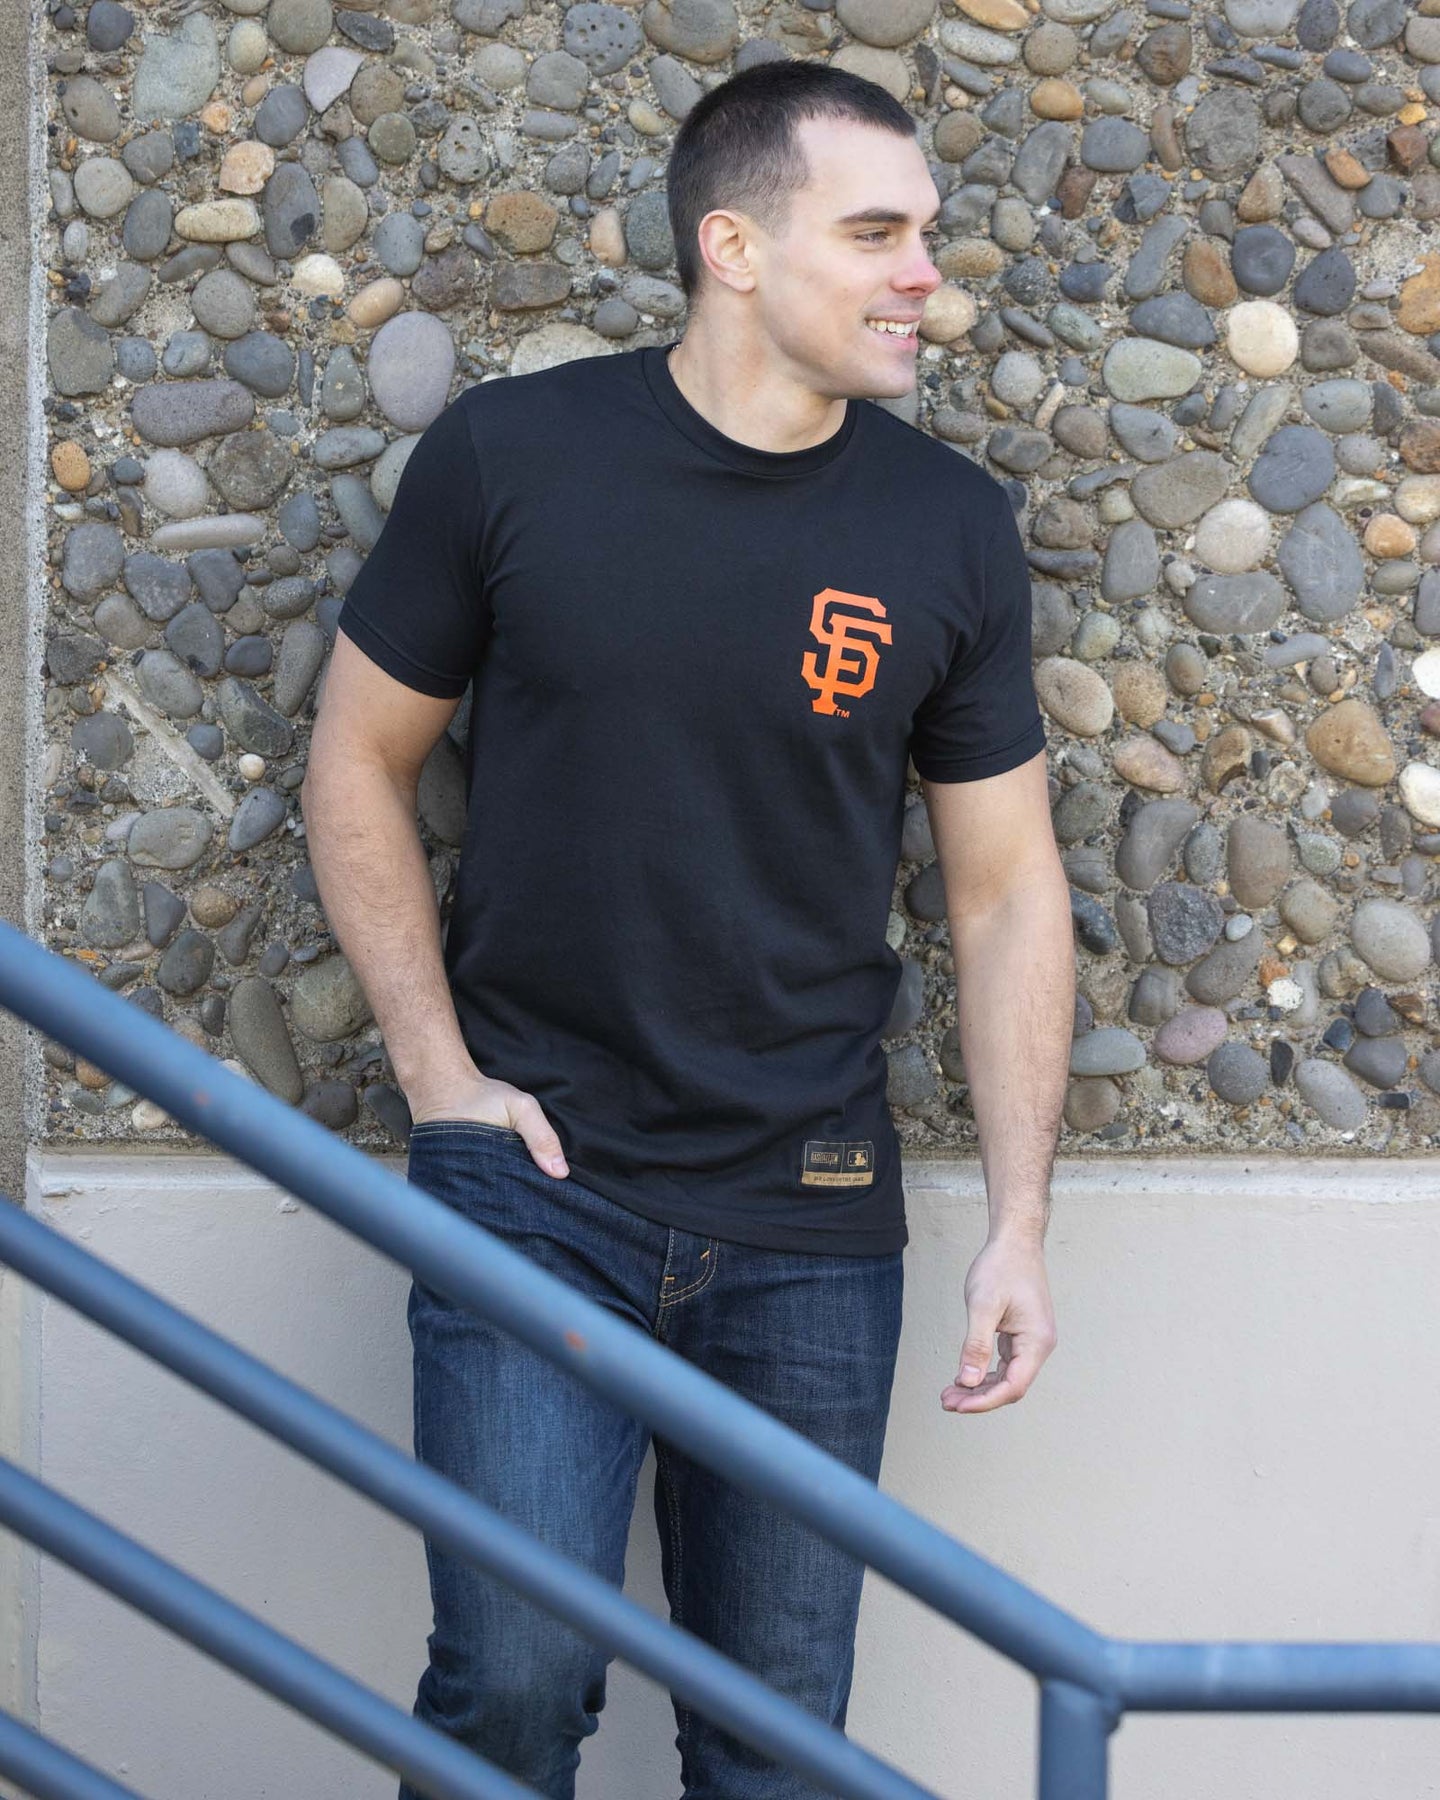 MLB San Francisco Giants Boys' Poly T-Shirt - XS